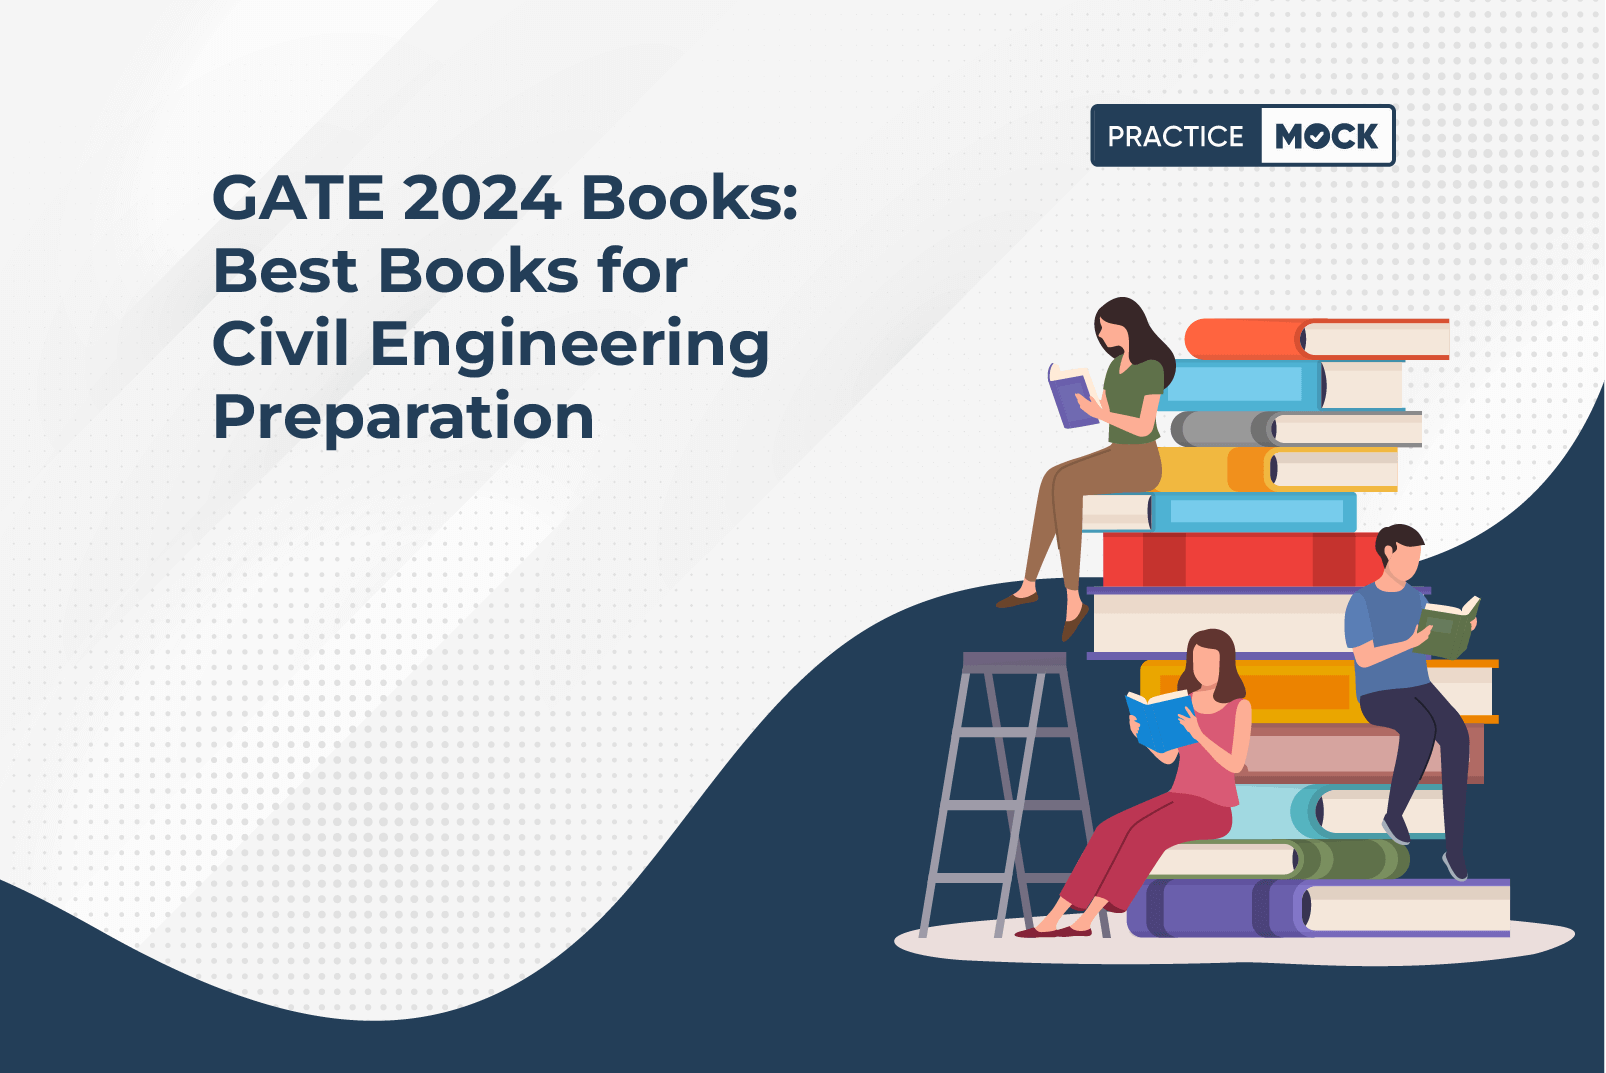 GATE 2024 Books: Best Books for Civil Engineering Preparation